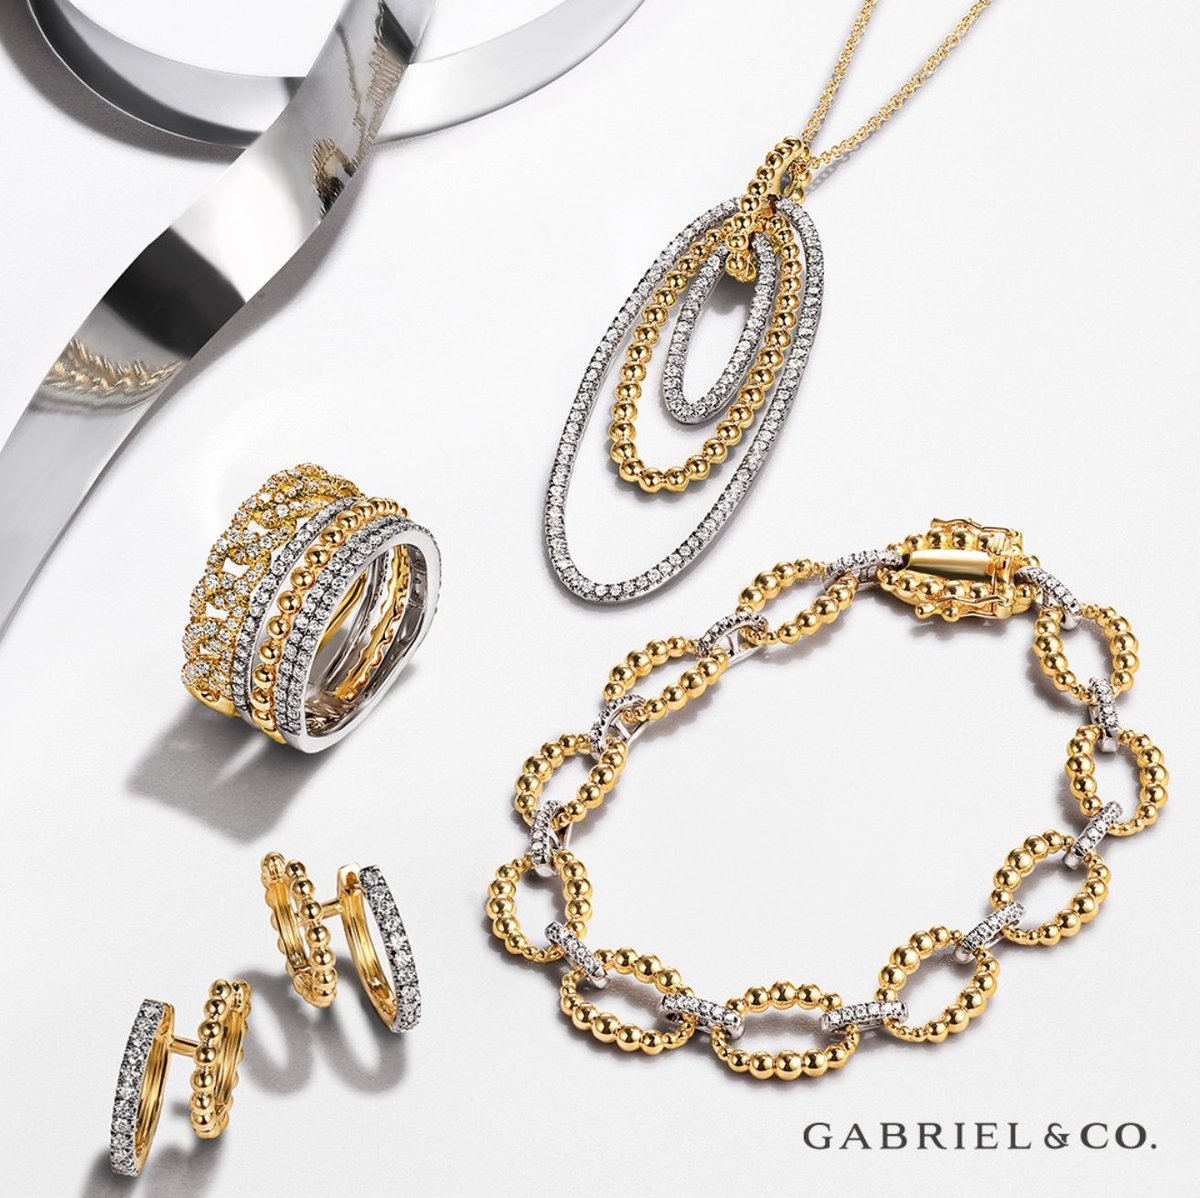 2023 Goal: Wear More Jewelry! ✨

Styles: TB4629M45JJ, LR51517M45JJ, NK7279M45JJ, EG14526Y45JJ

#gold #goldjewelry #loveforjewelry #styleseekers #selfgifting #finejewelrydesign #necklaces #necklaceoftheday #earringsoftheday